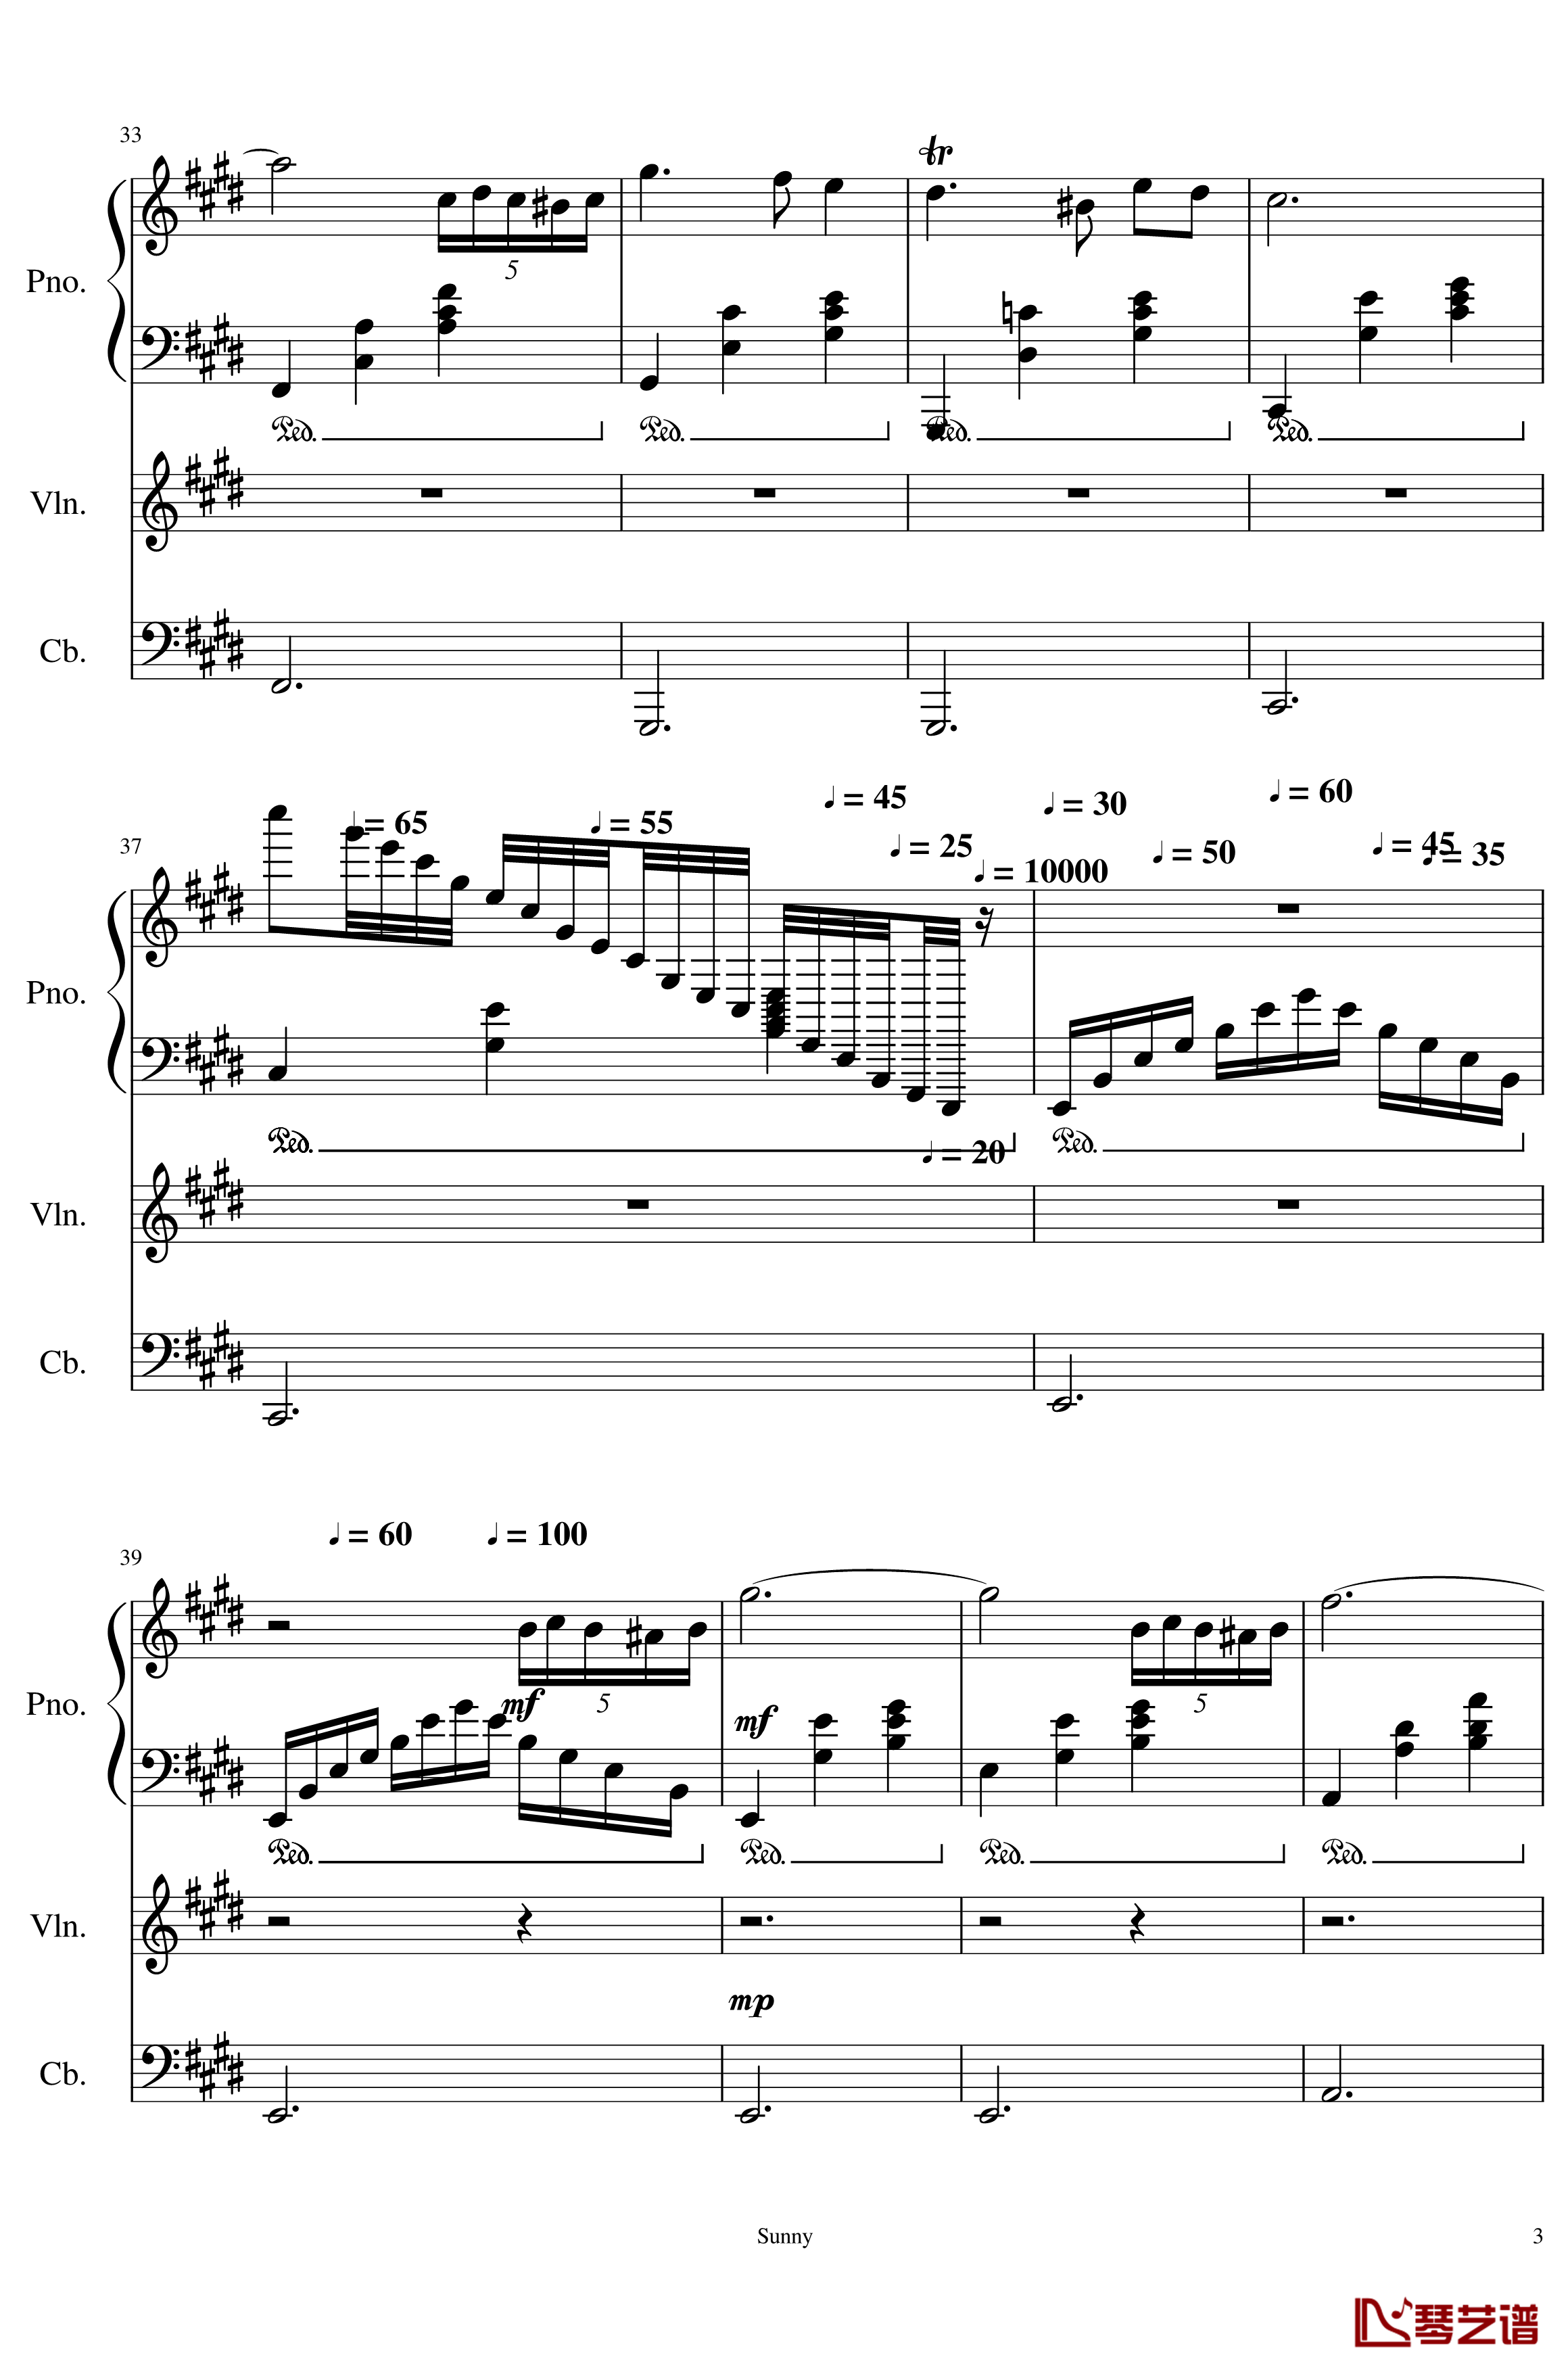 Op.1-2 钢琴谱-最苦与最乐-SunnyAK47